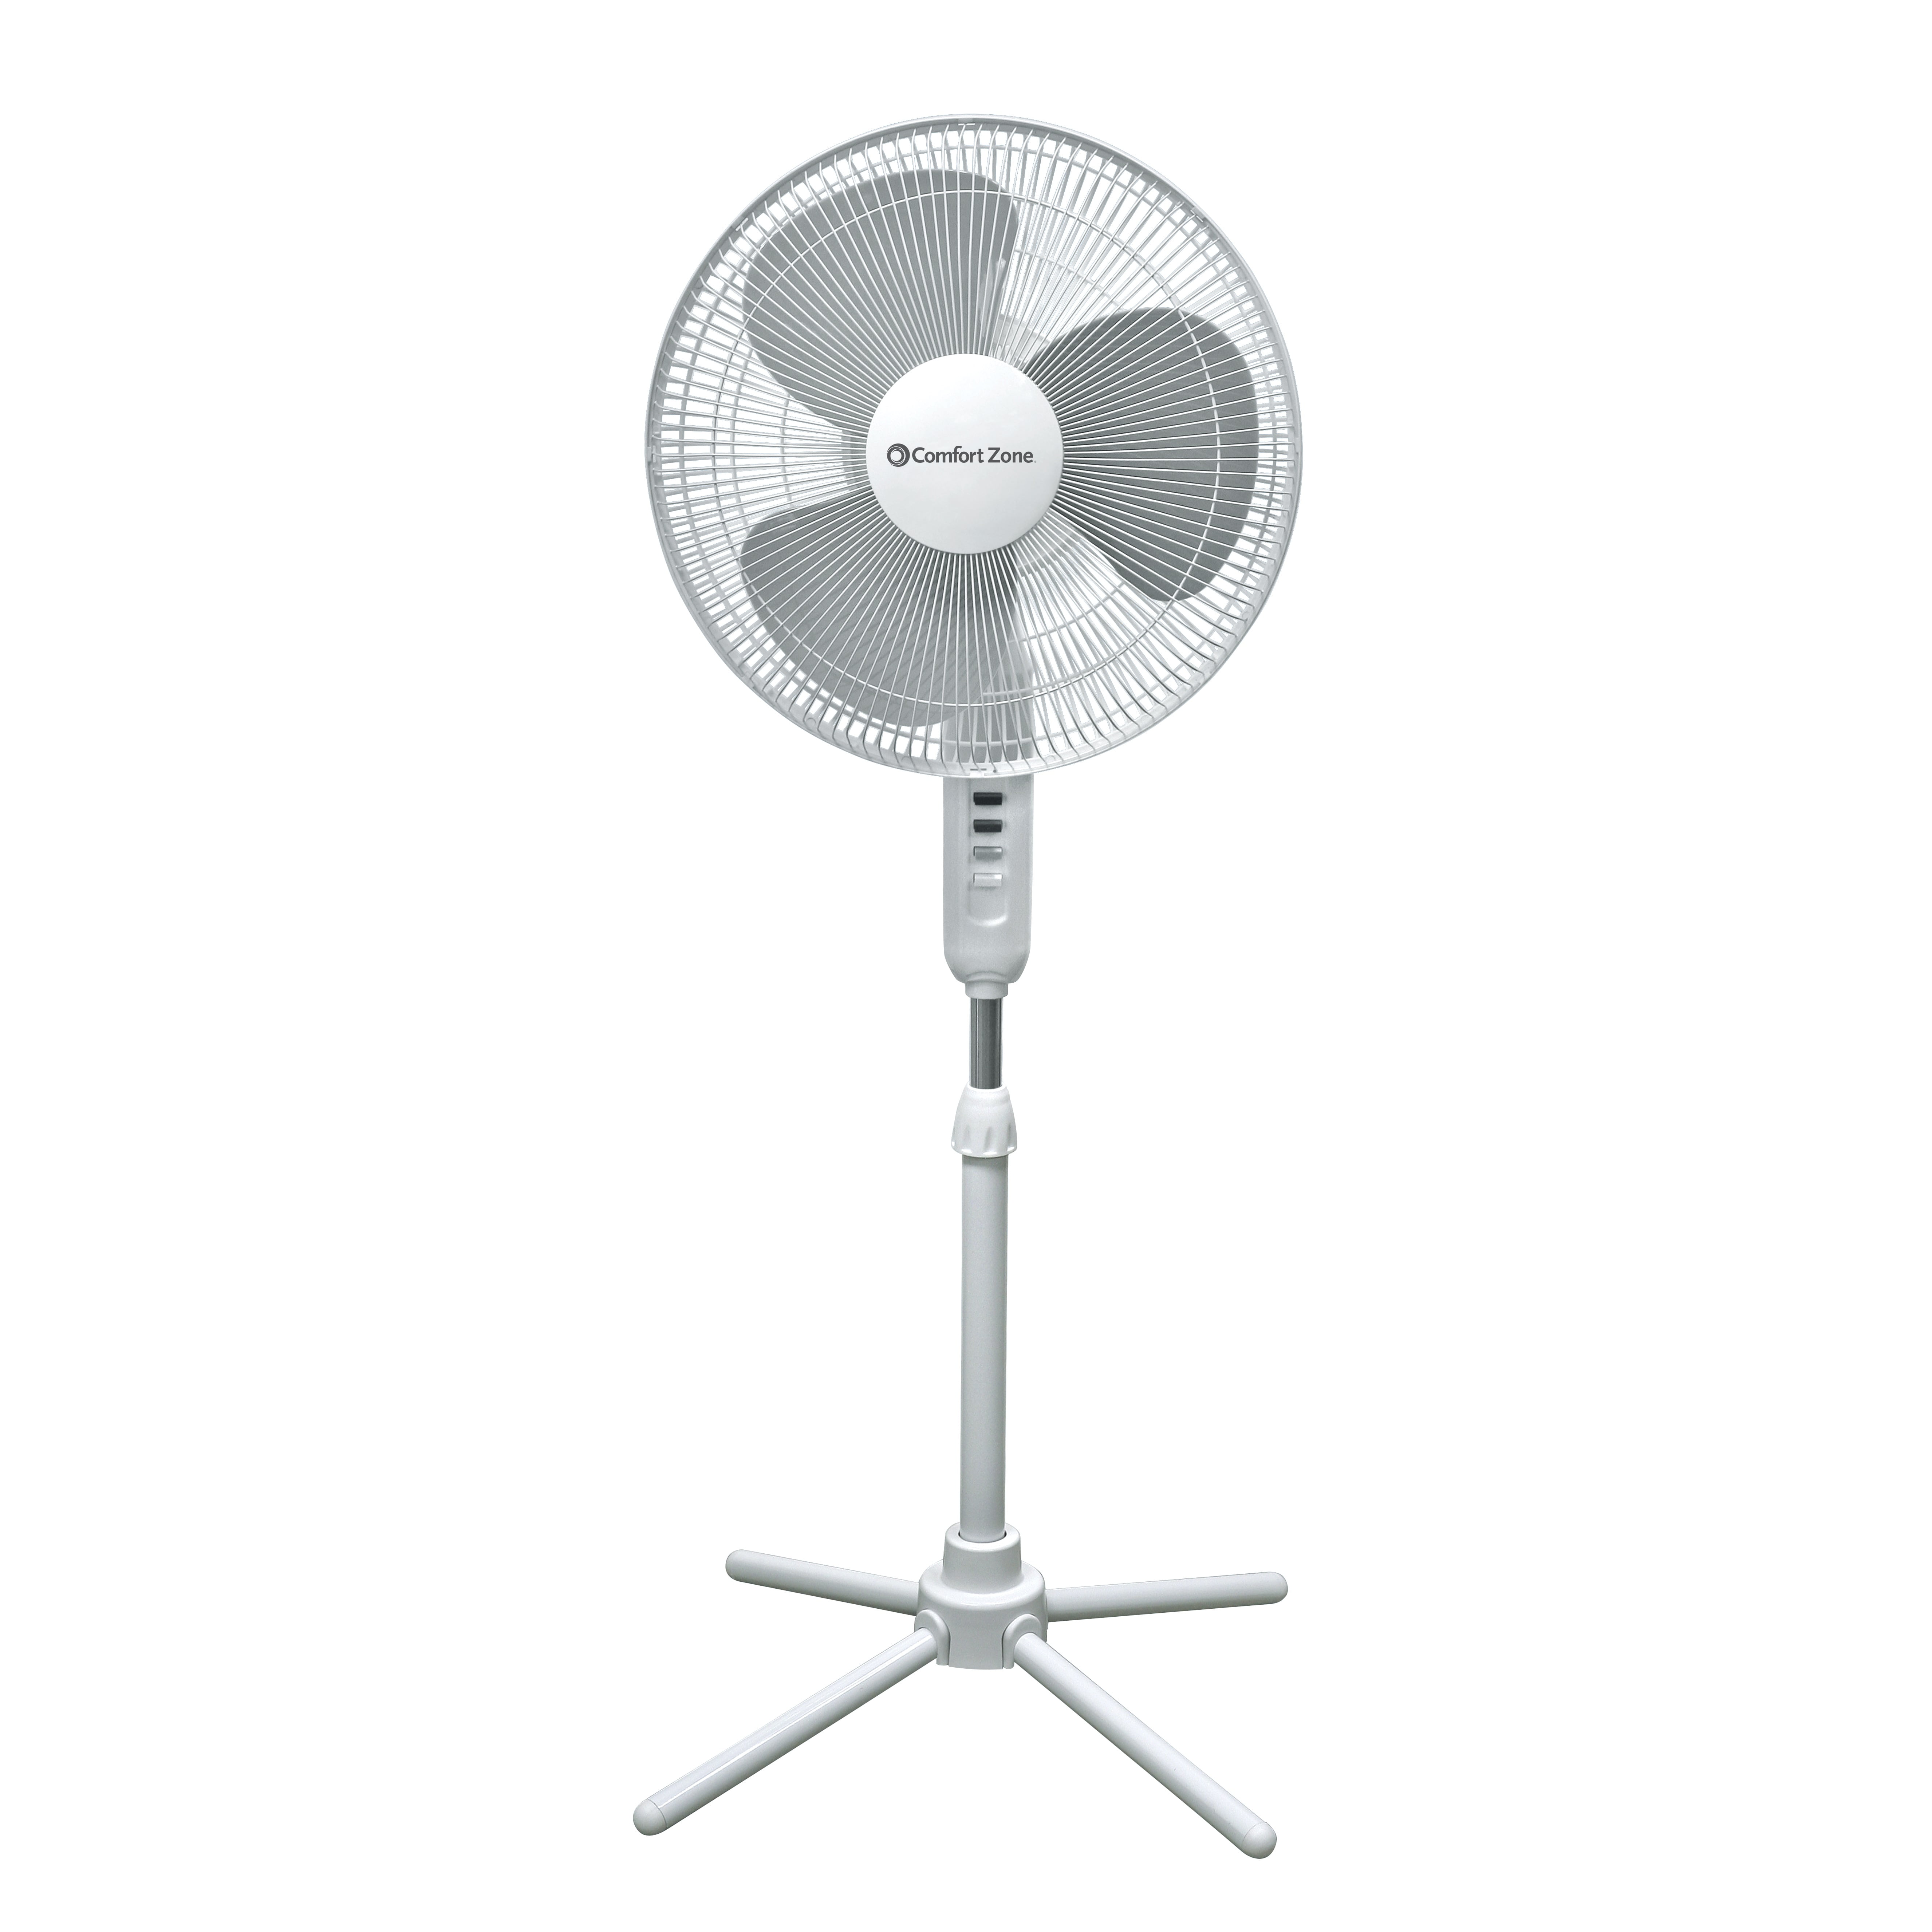 Summer Silent Quiet Pedestal Oscillating Fan 16 inch Adjustable Stand Electric 